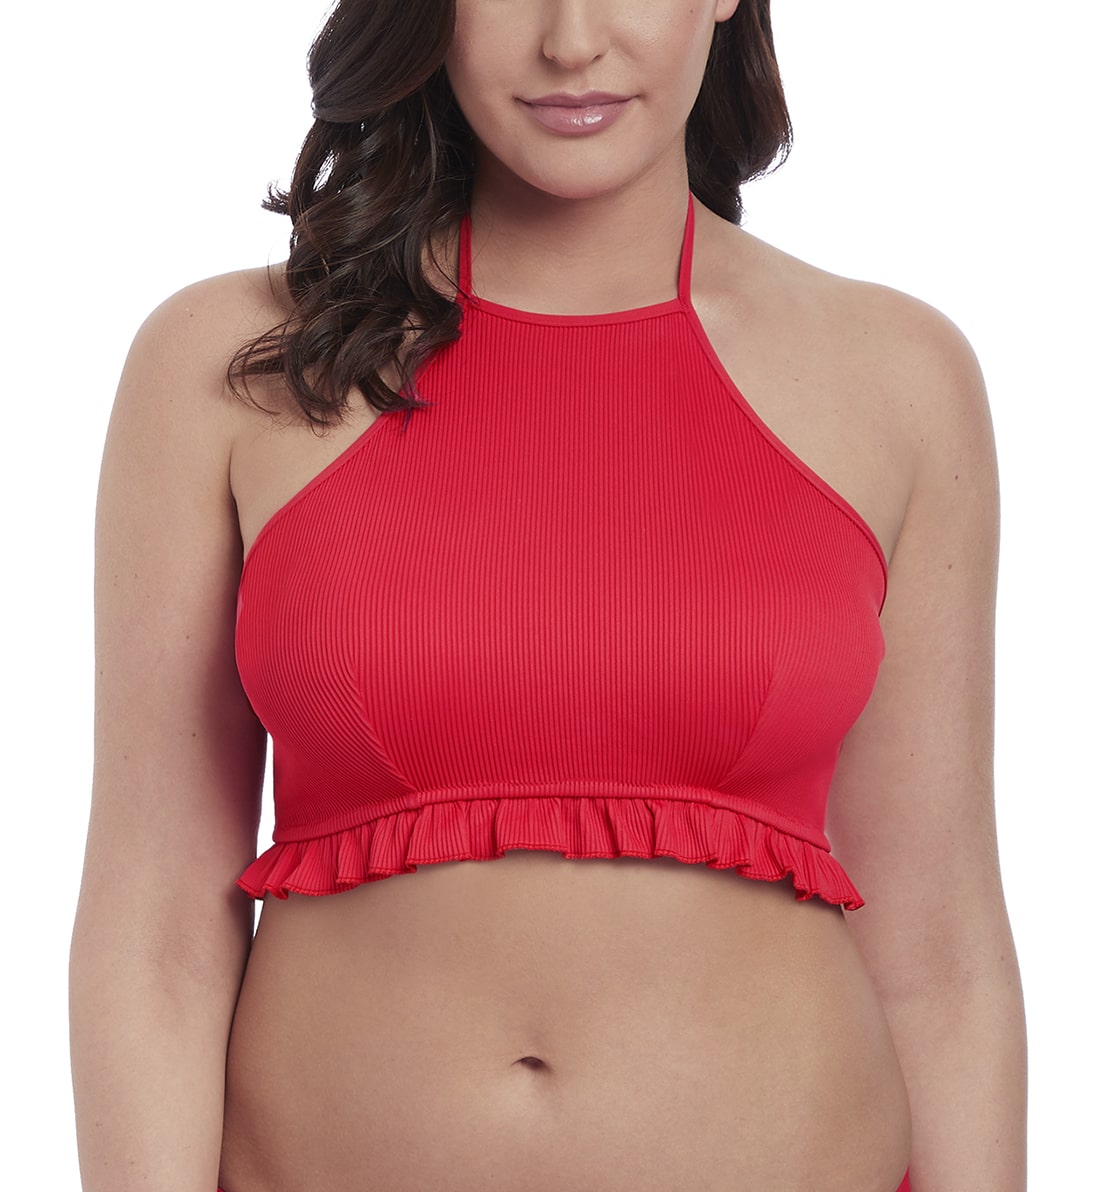 Freya Nouveau Padded Hi-Neck Crop Top Underwire Bikini (6702),28E,Red - Red,28E